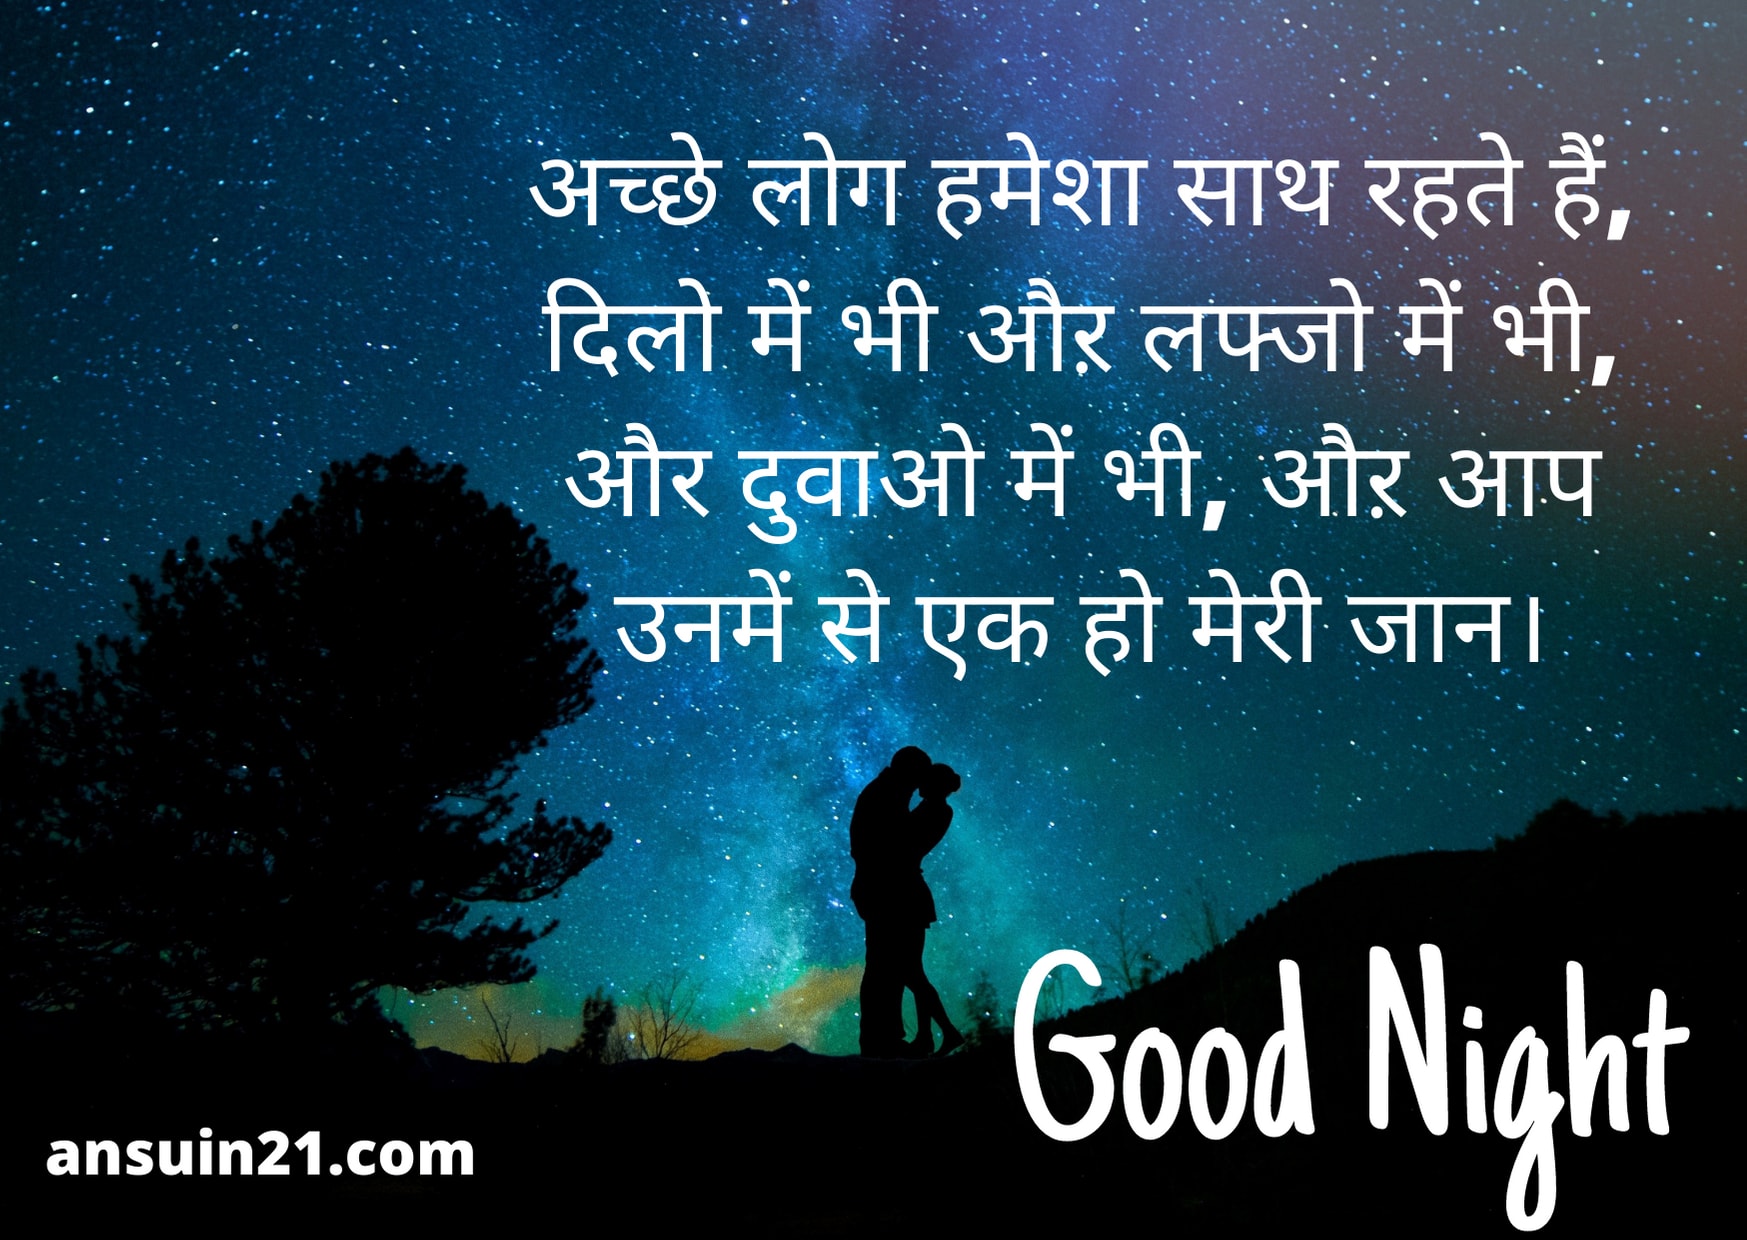 Best Good Night Hindi Wishes, Images, Status, SMS, Shayari